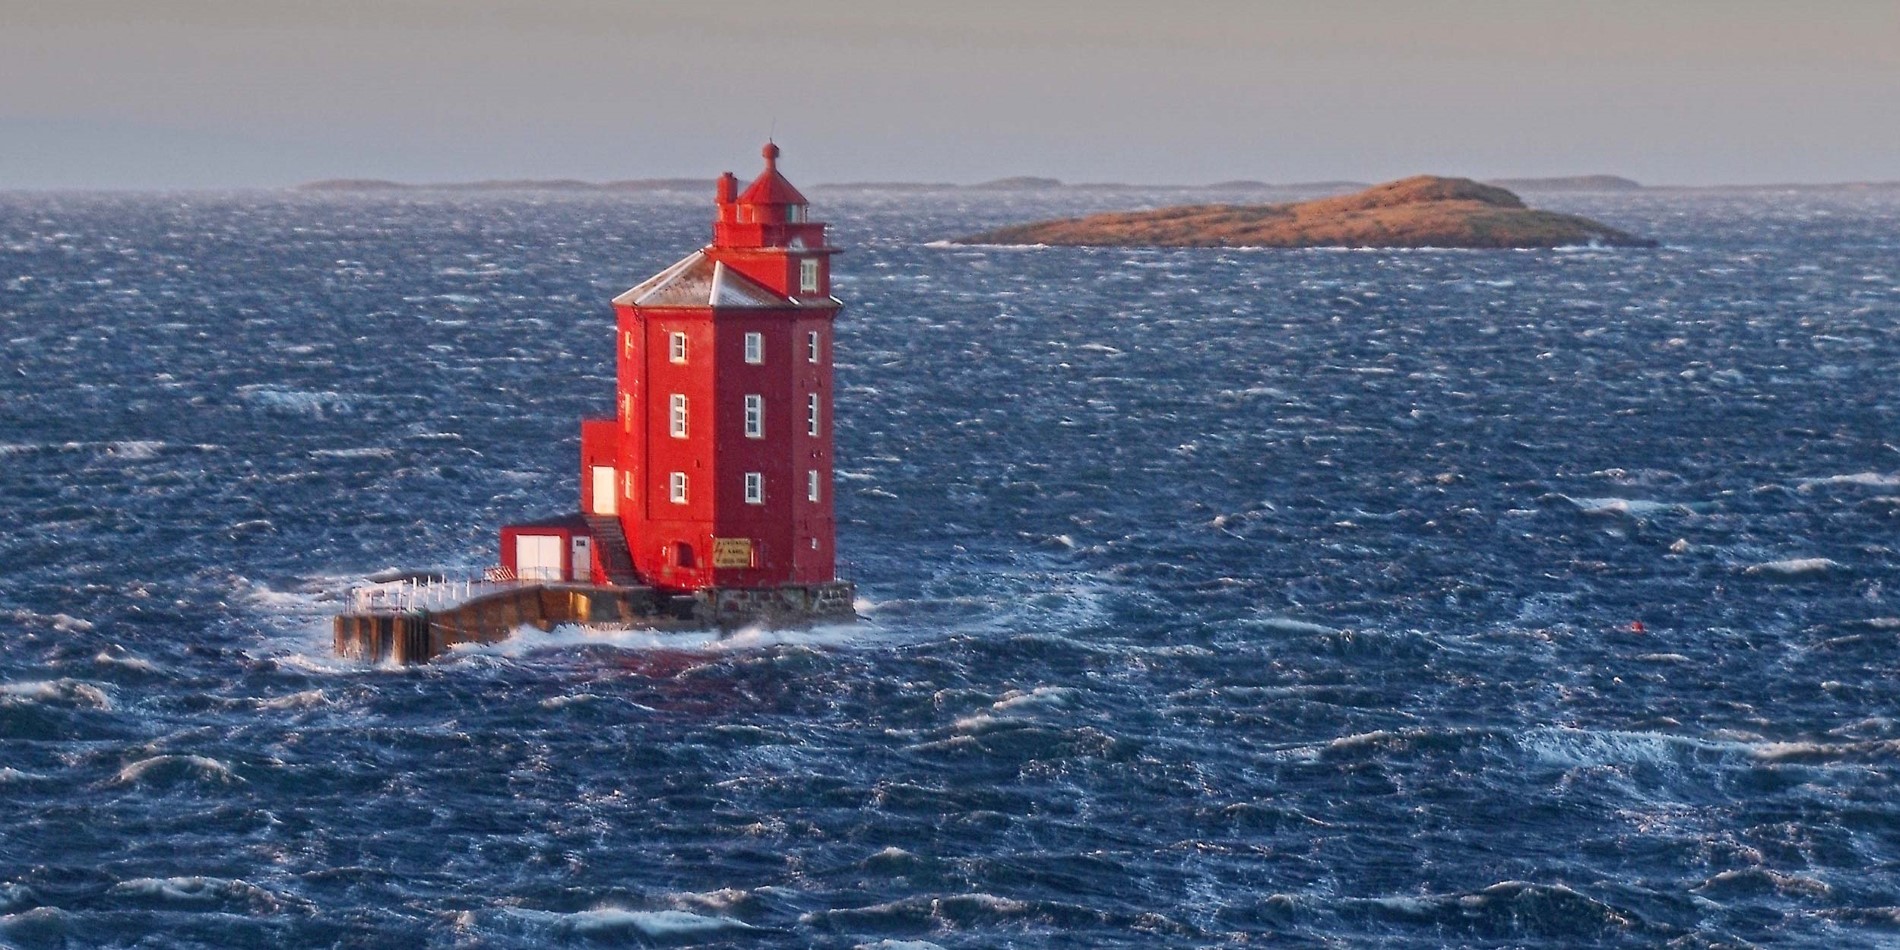 Kjeungskjær Lighthouse in rough weather